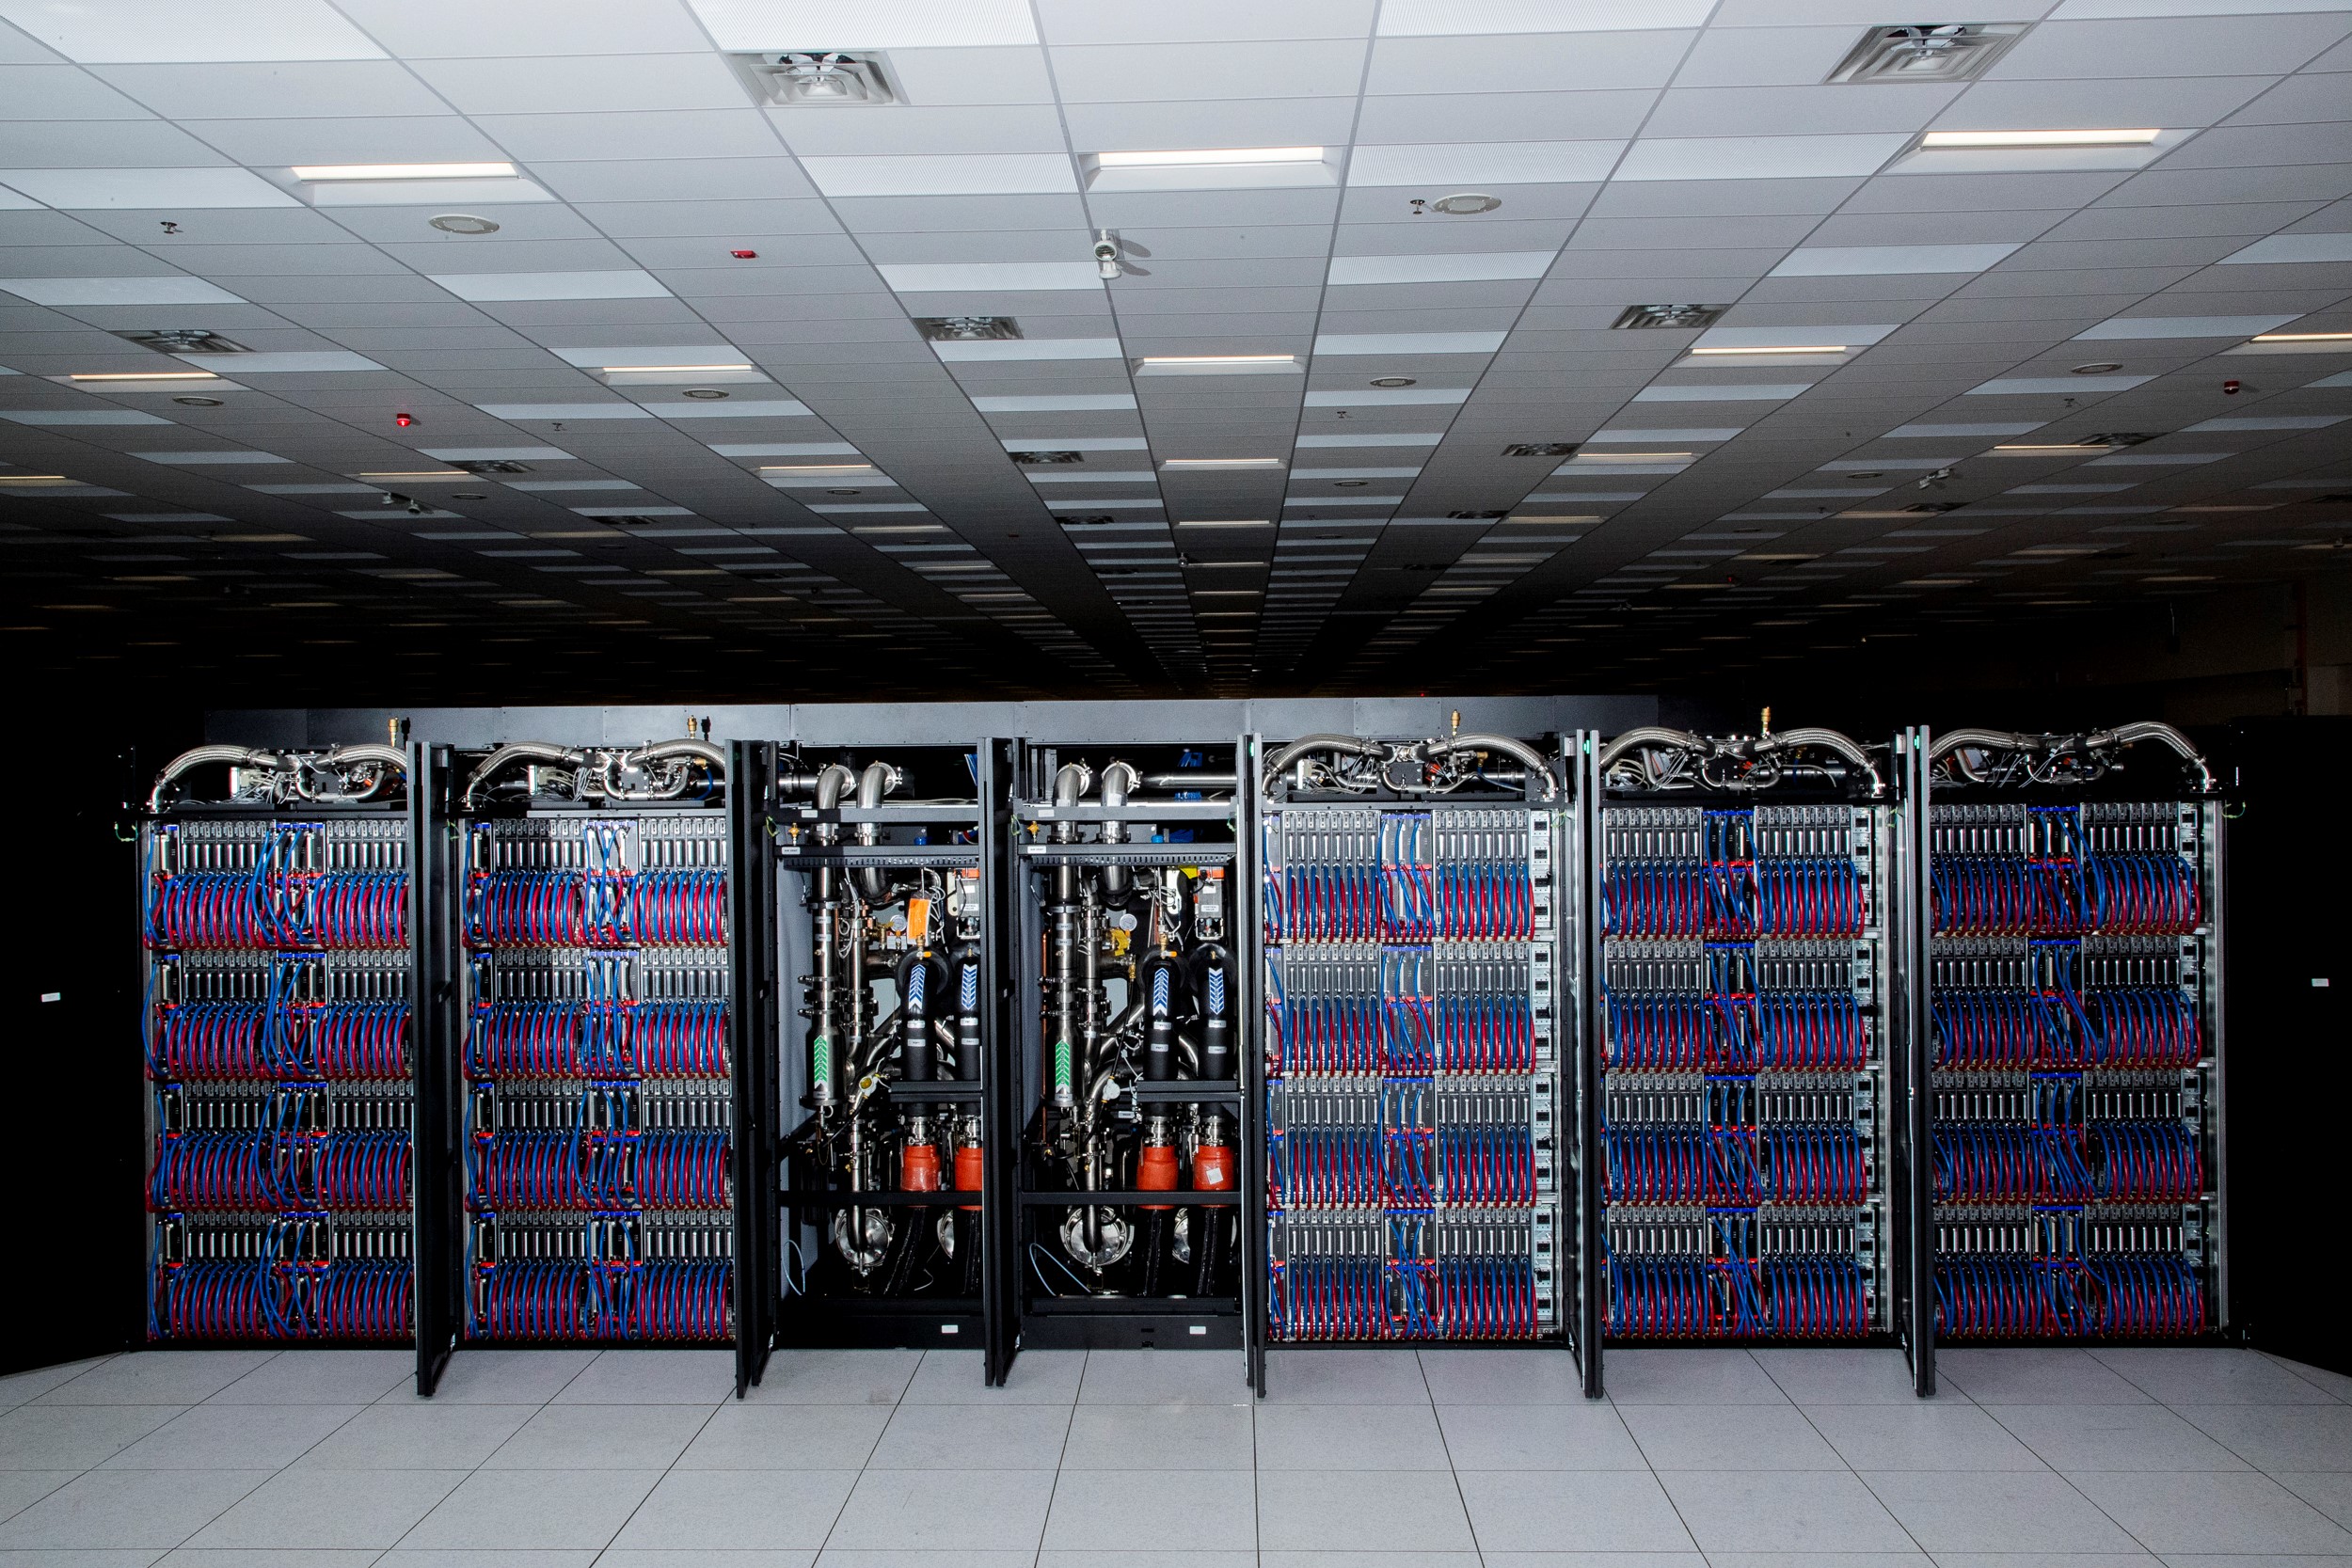 The Venado supercomputer